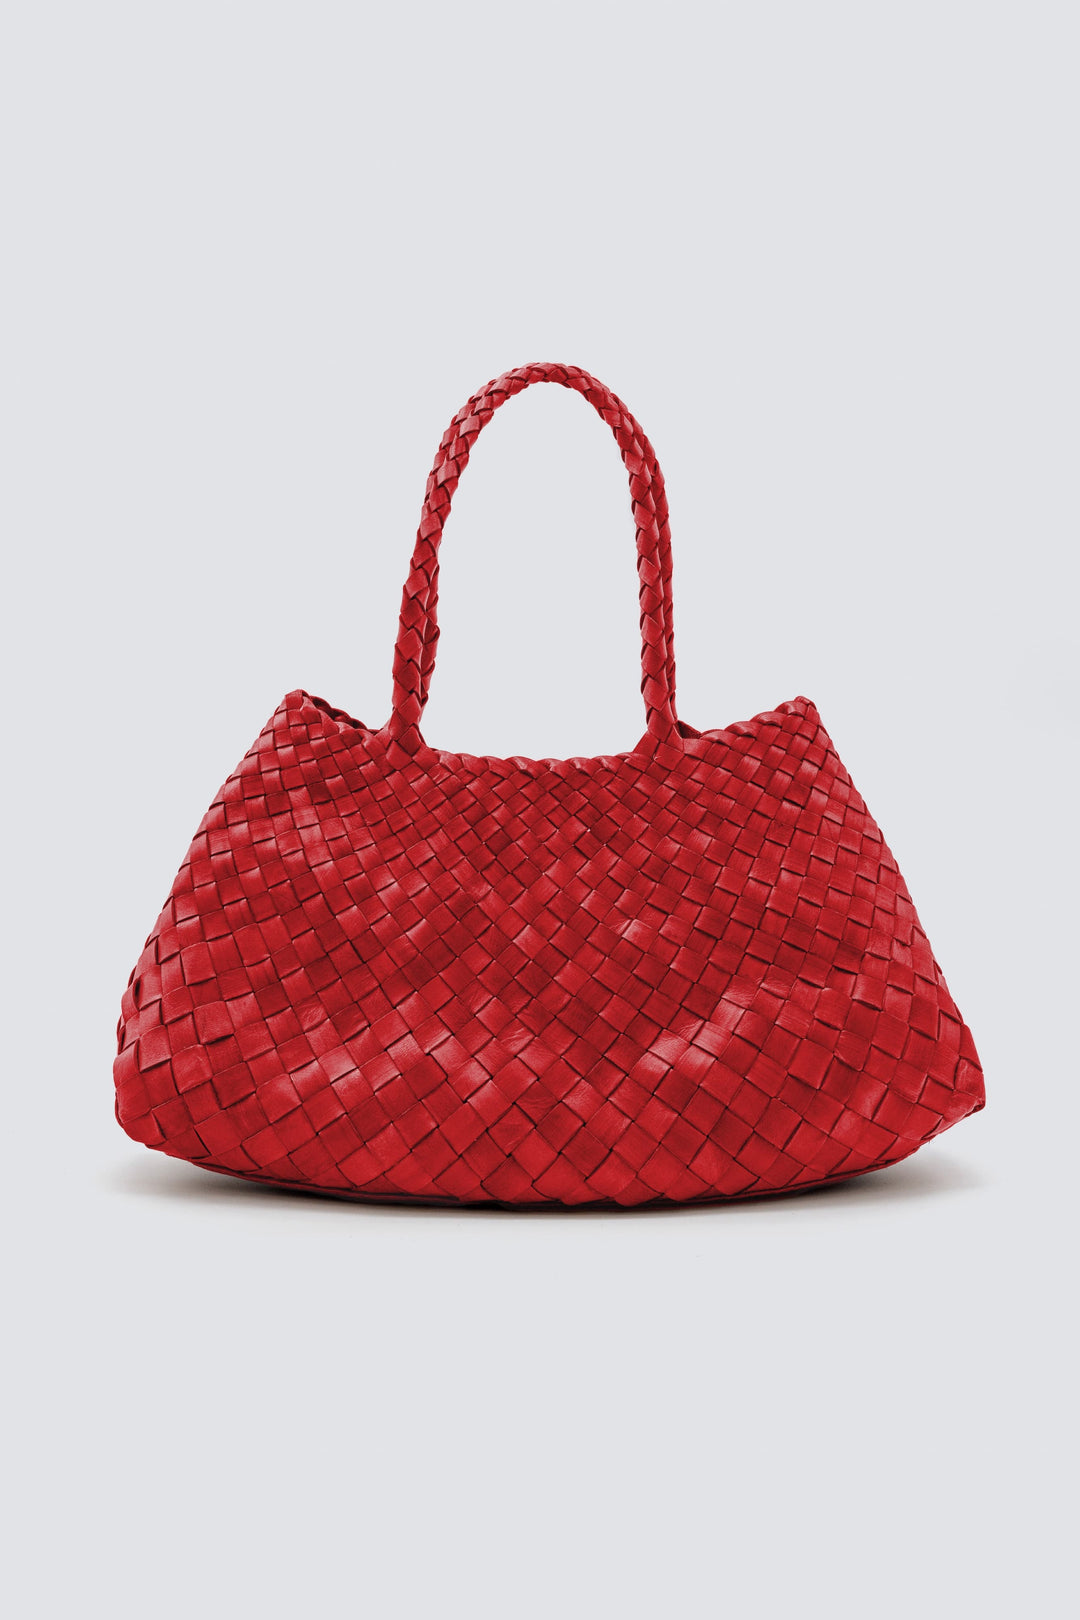 Dragon Diffusion woven leather bag handmade - Santa Croce Big Red